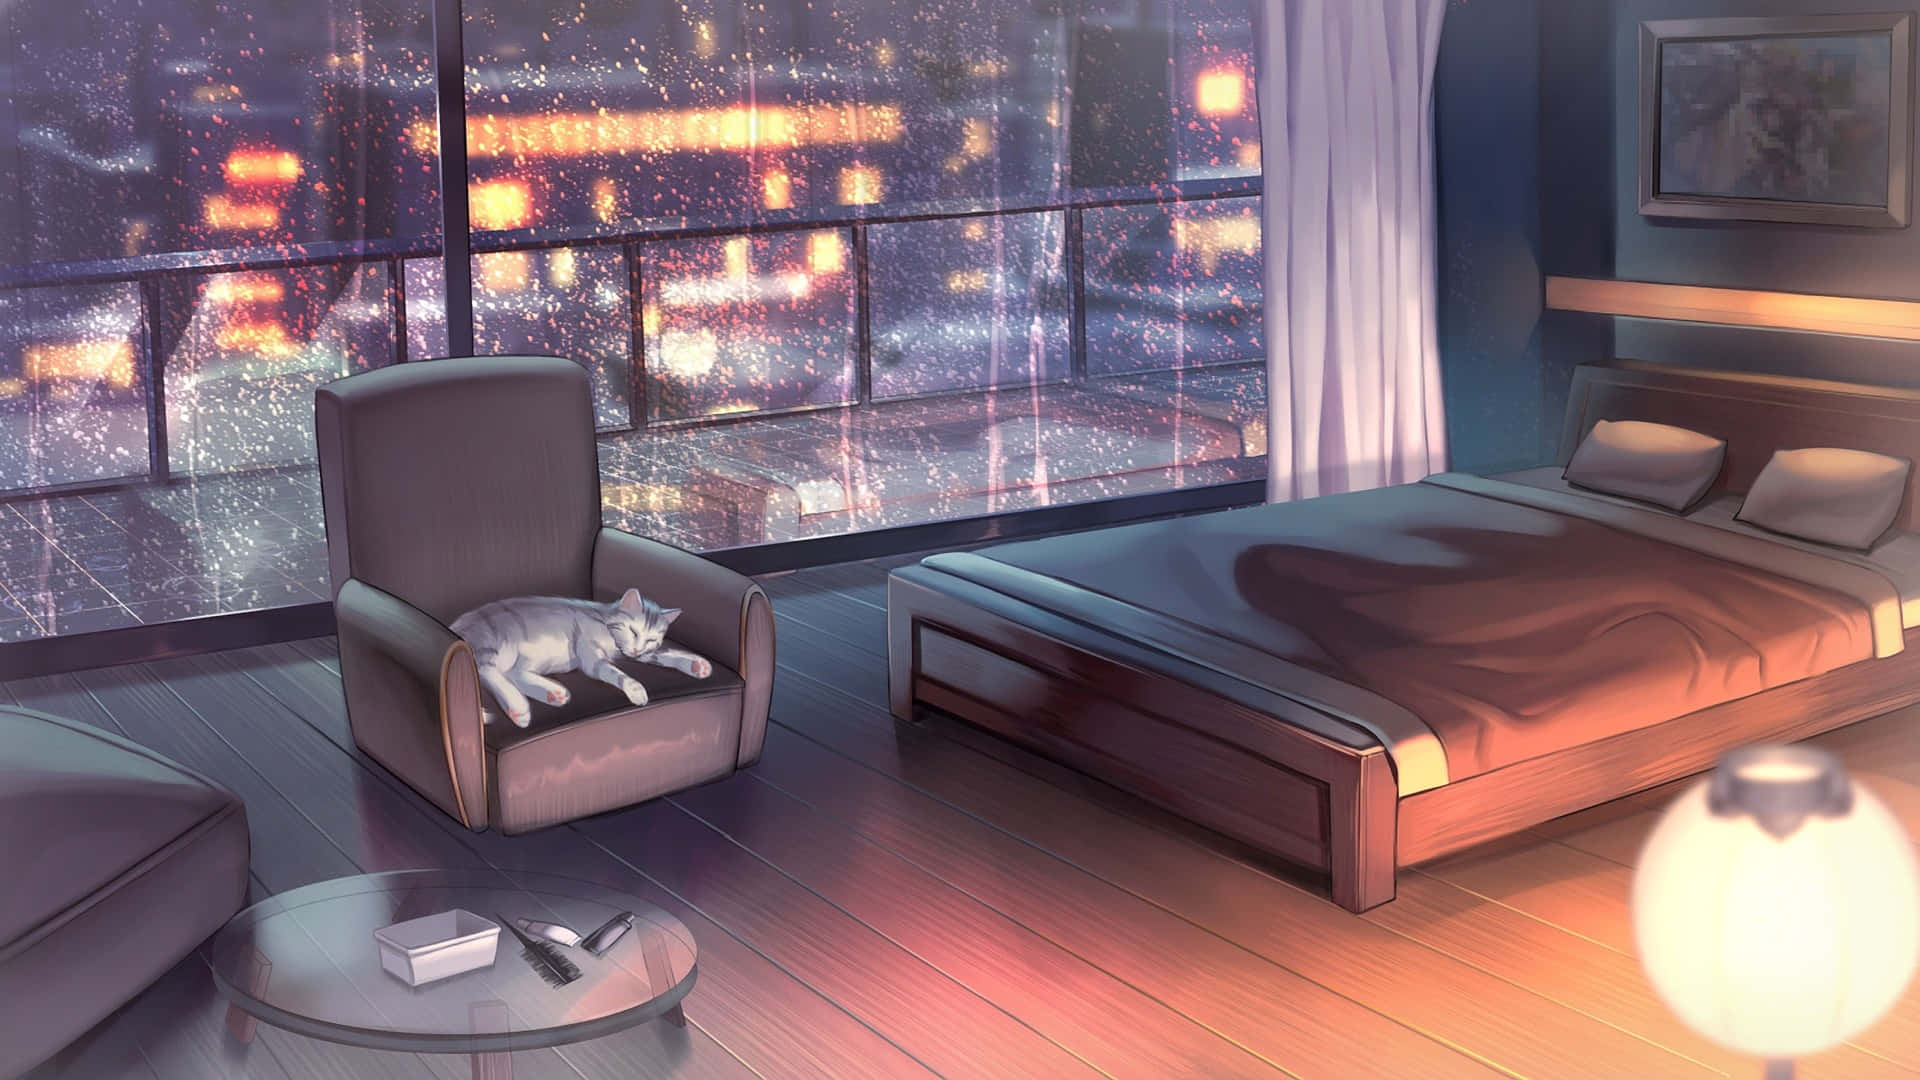 "Cozy Anime-Themed Bedroom"